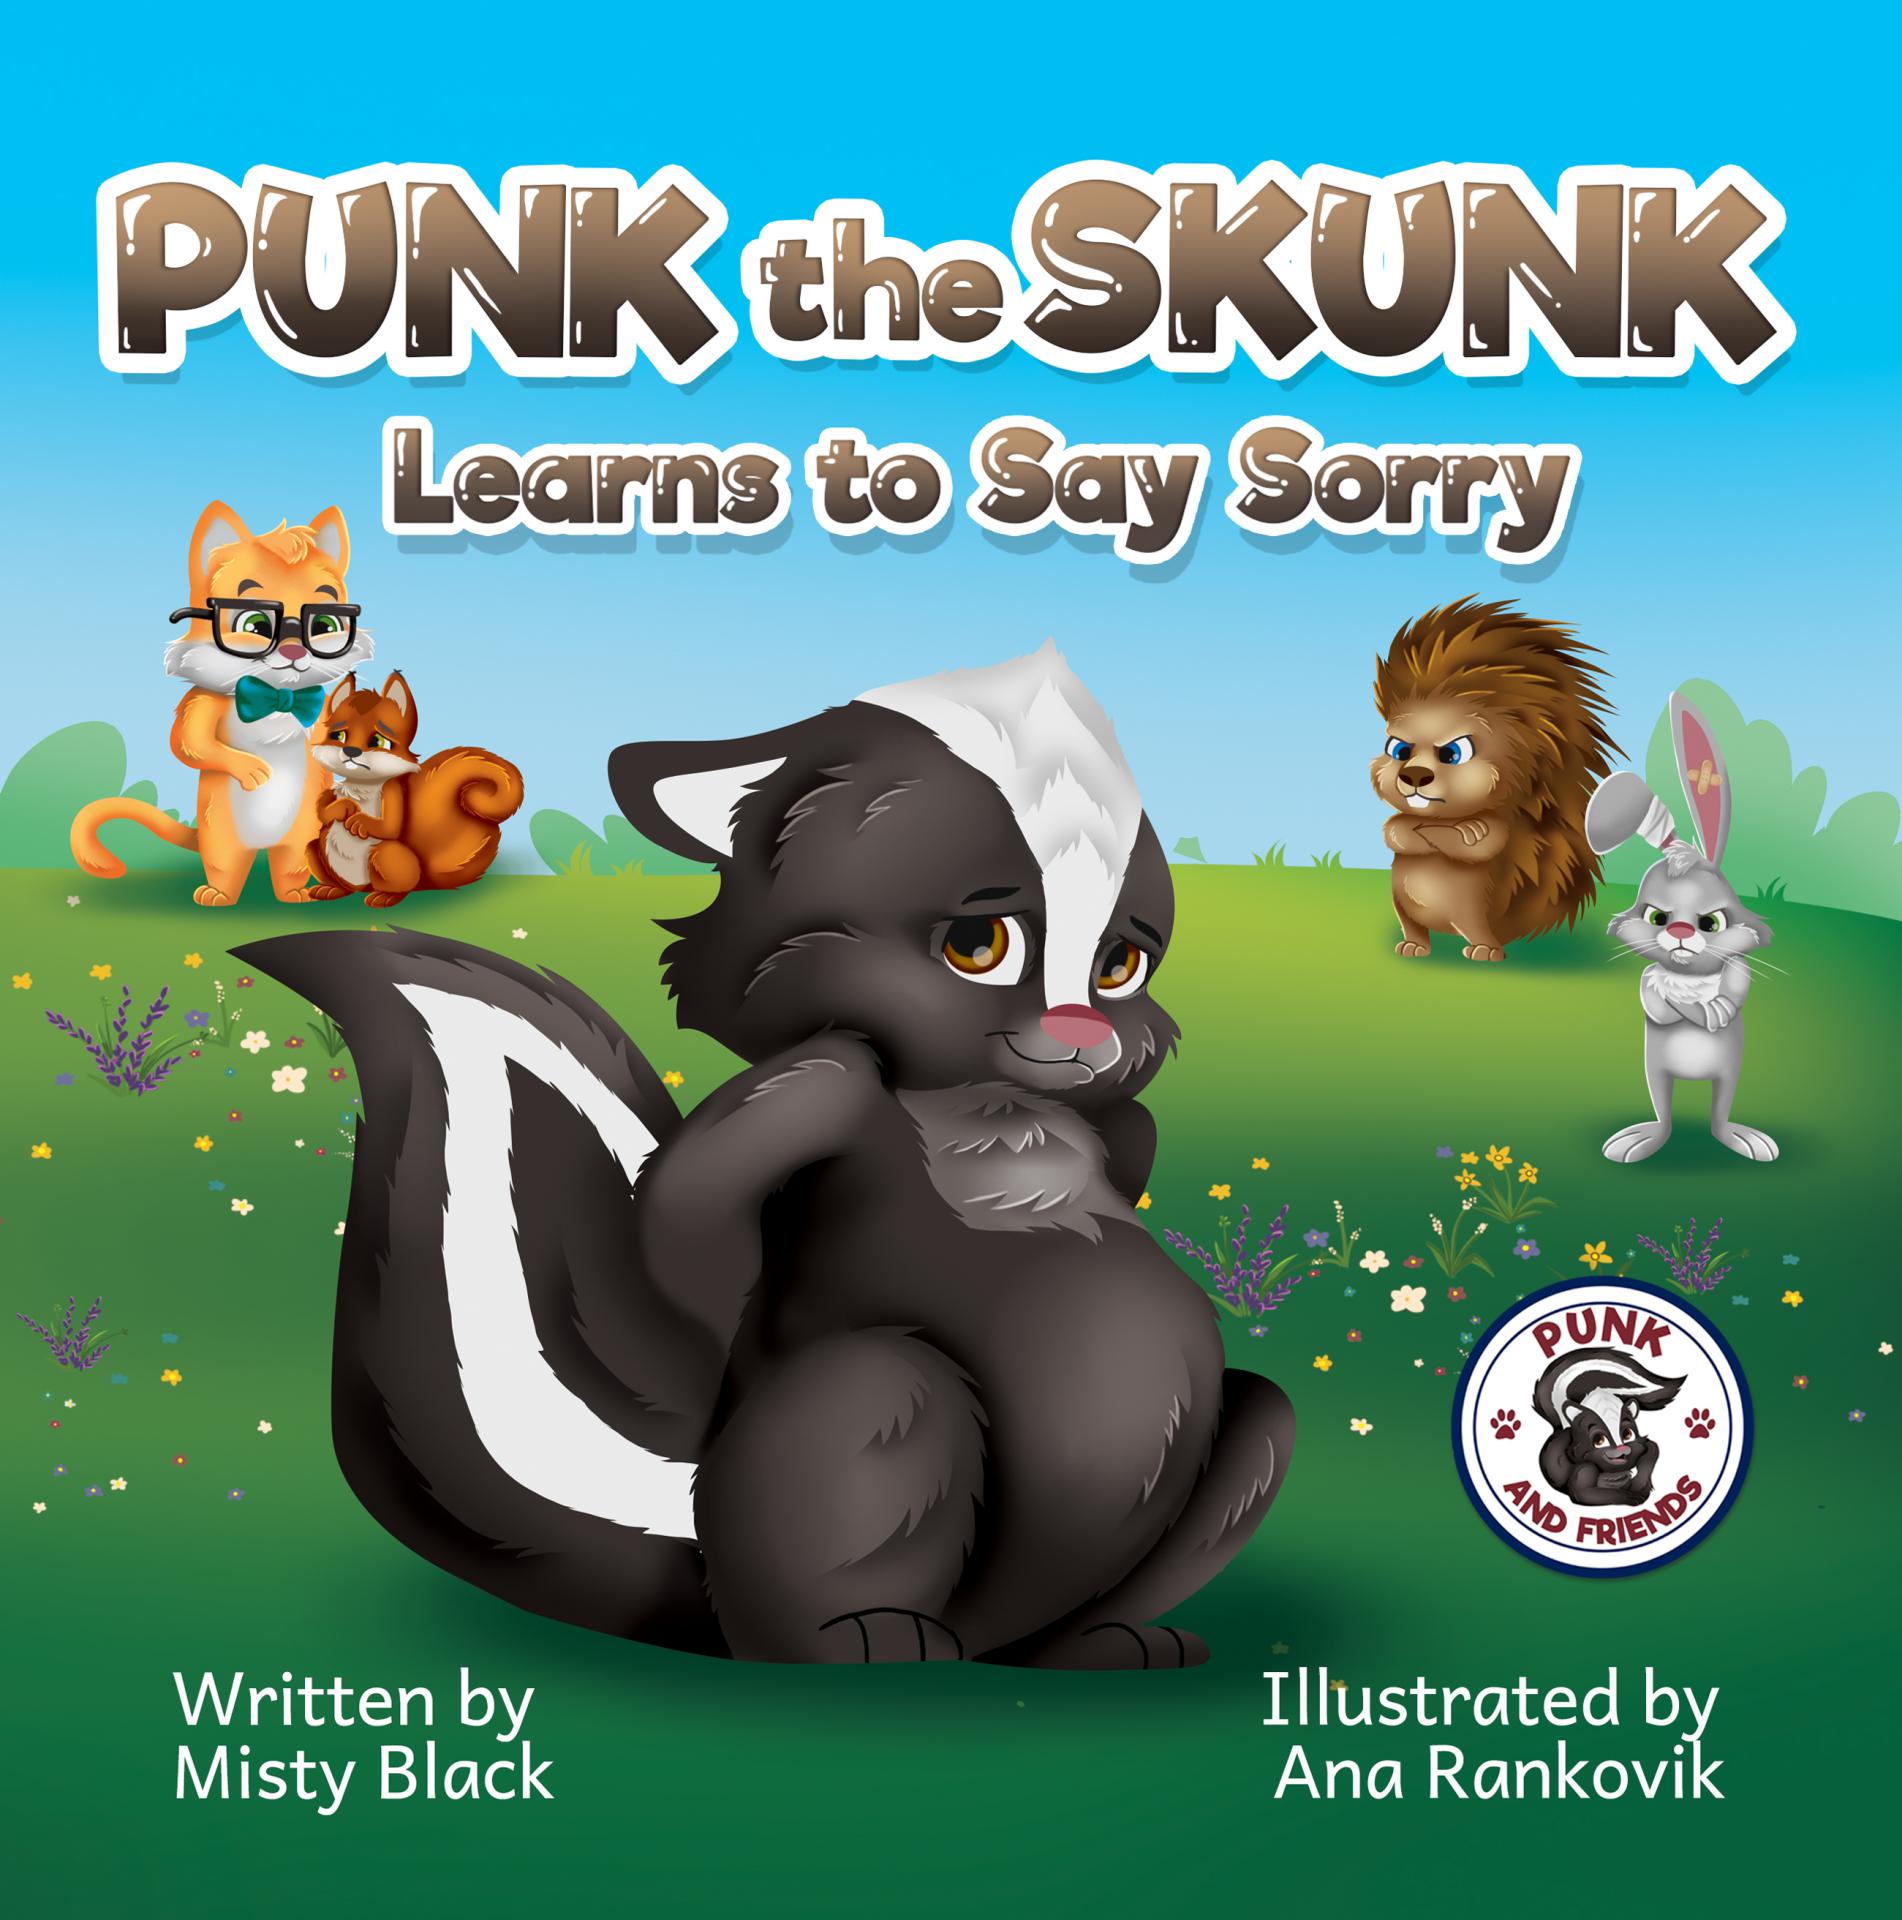 Punk the skunk